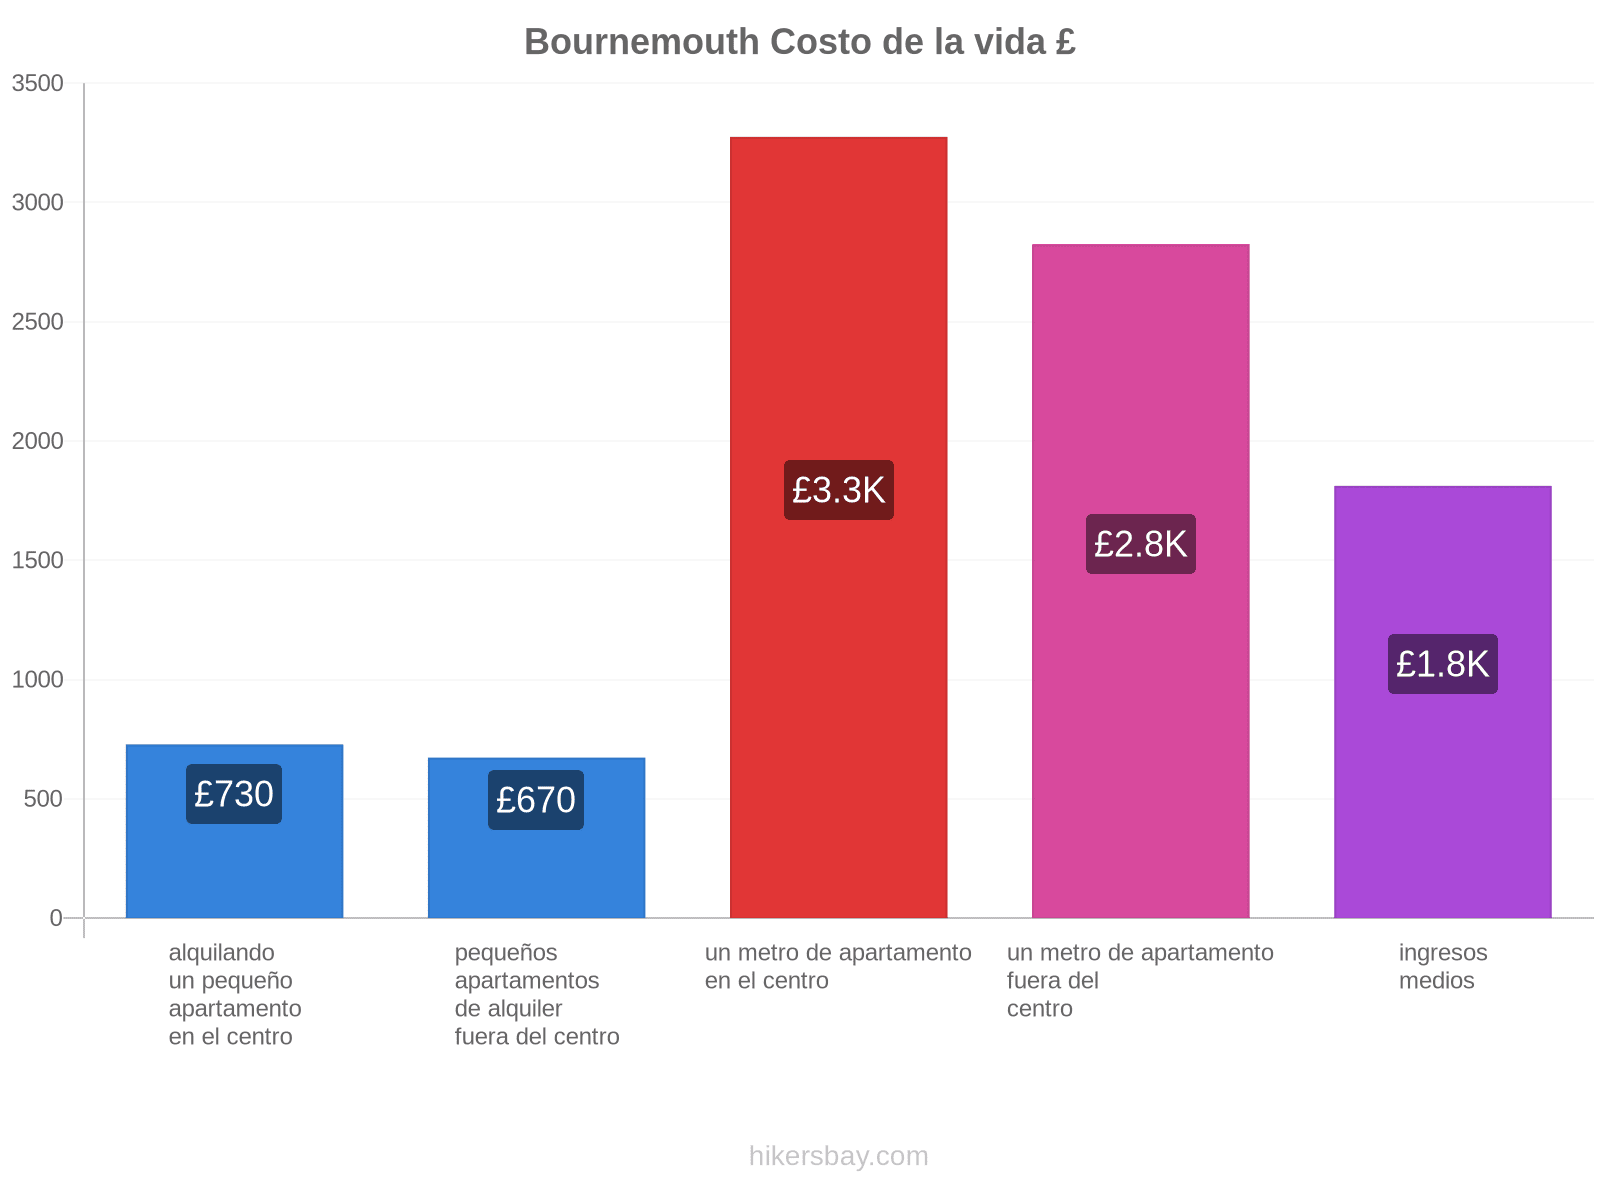 Bournemouth costo de la vida hikersbay.com